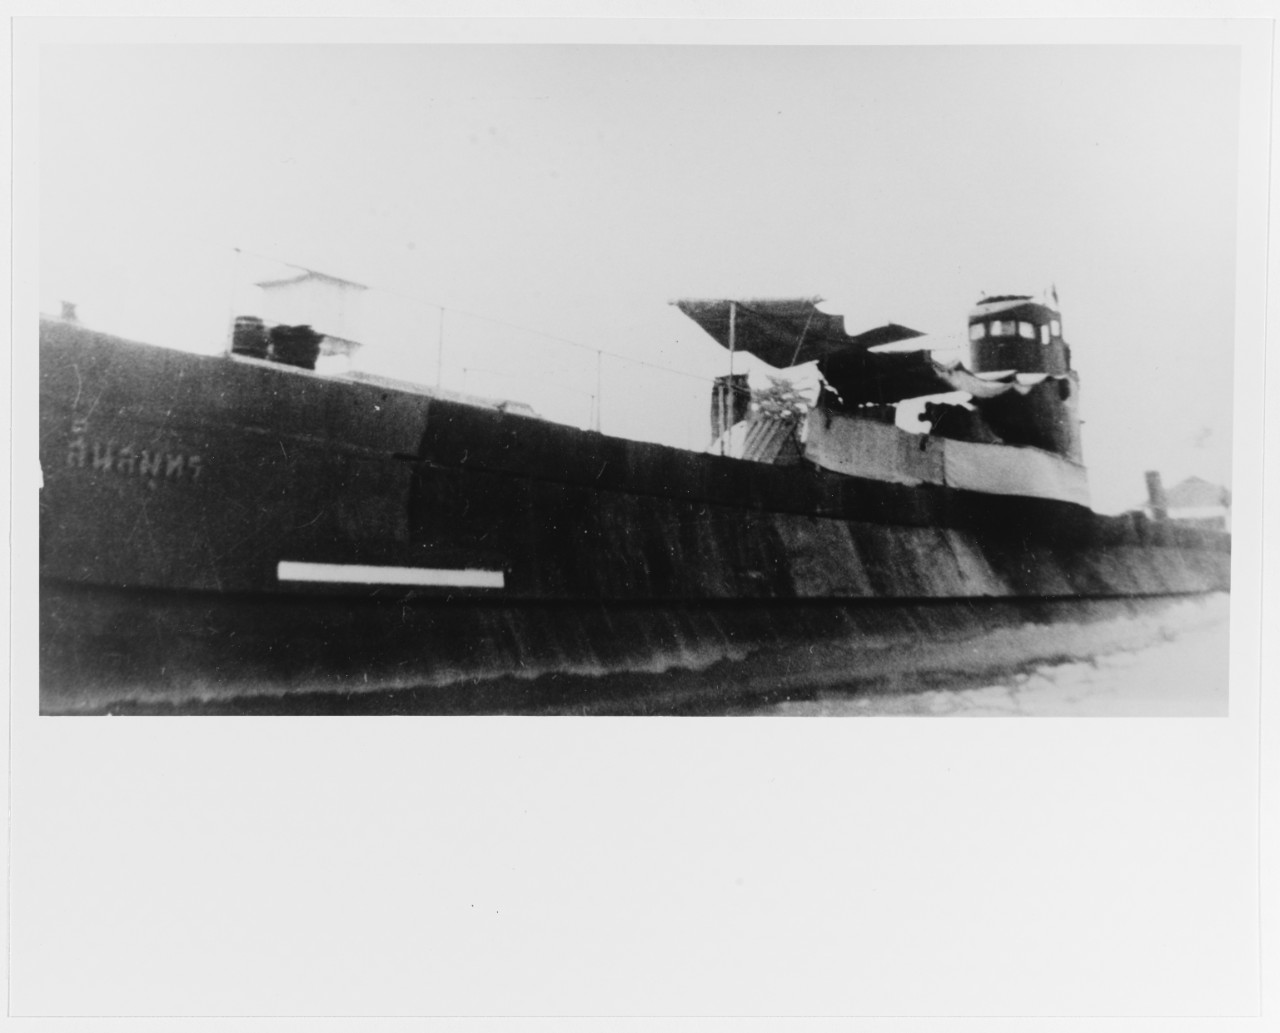 Thai submarine, probably the WIRUN (1937-1959)